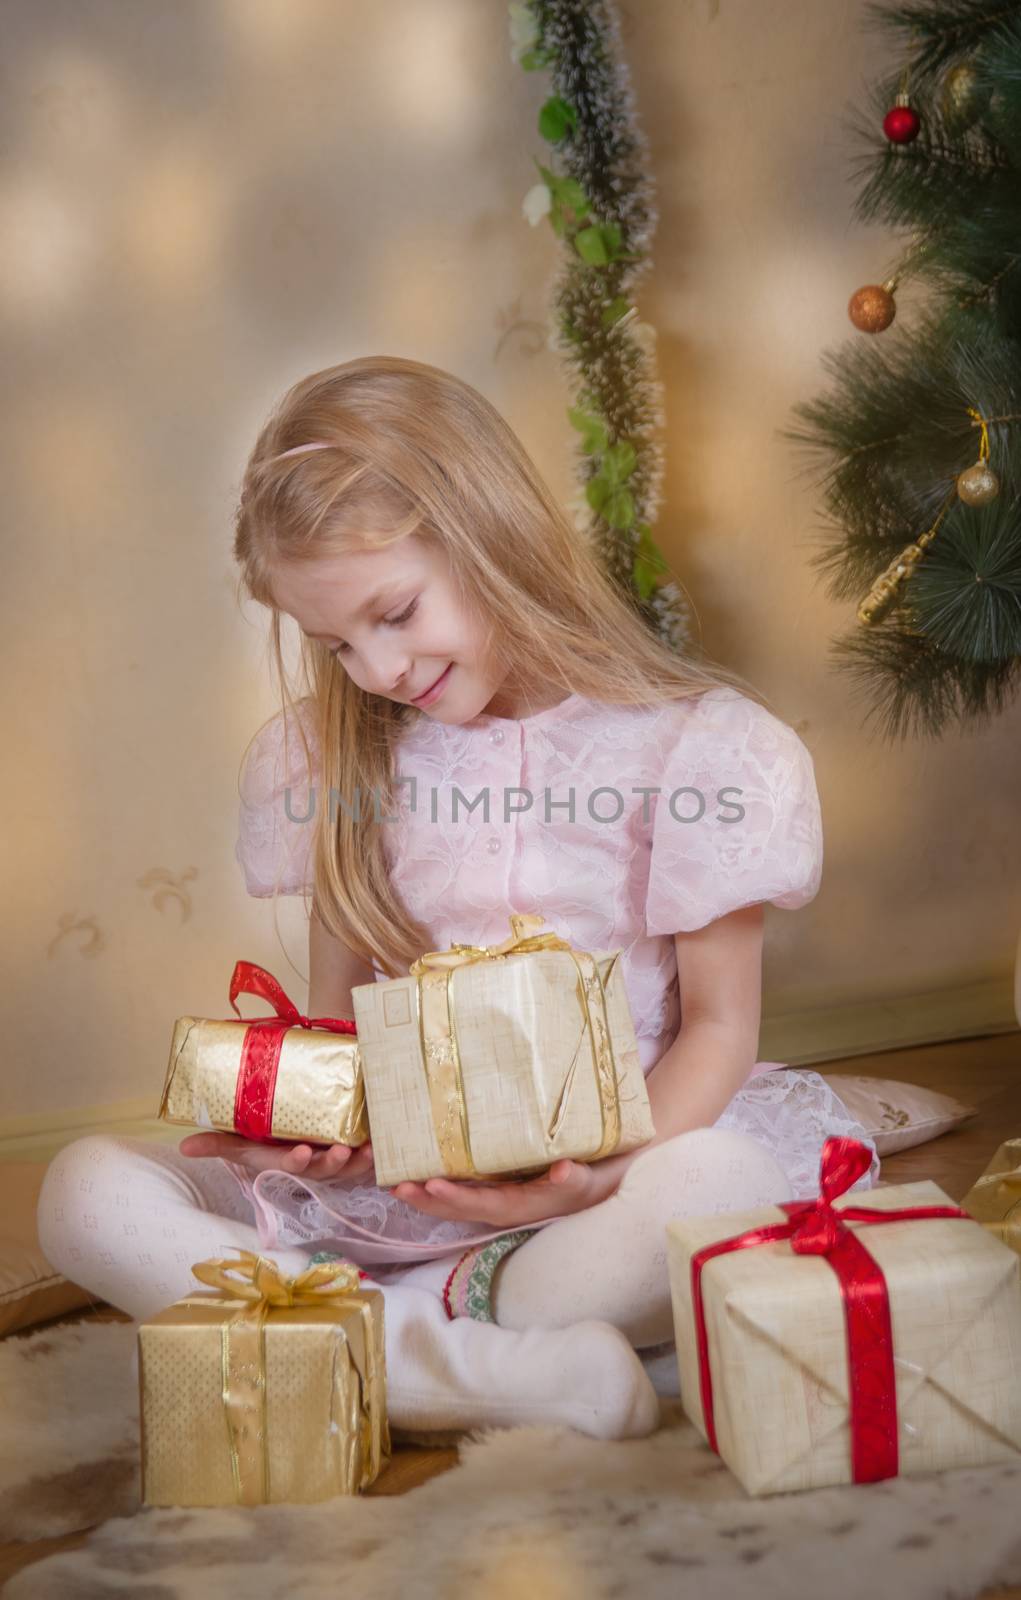 Cute girl among Christmas gifts dreaming